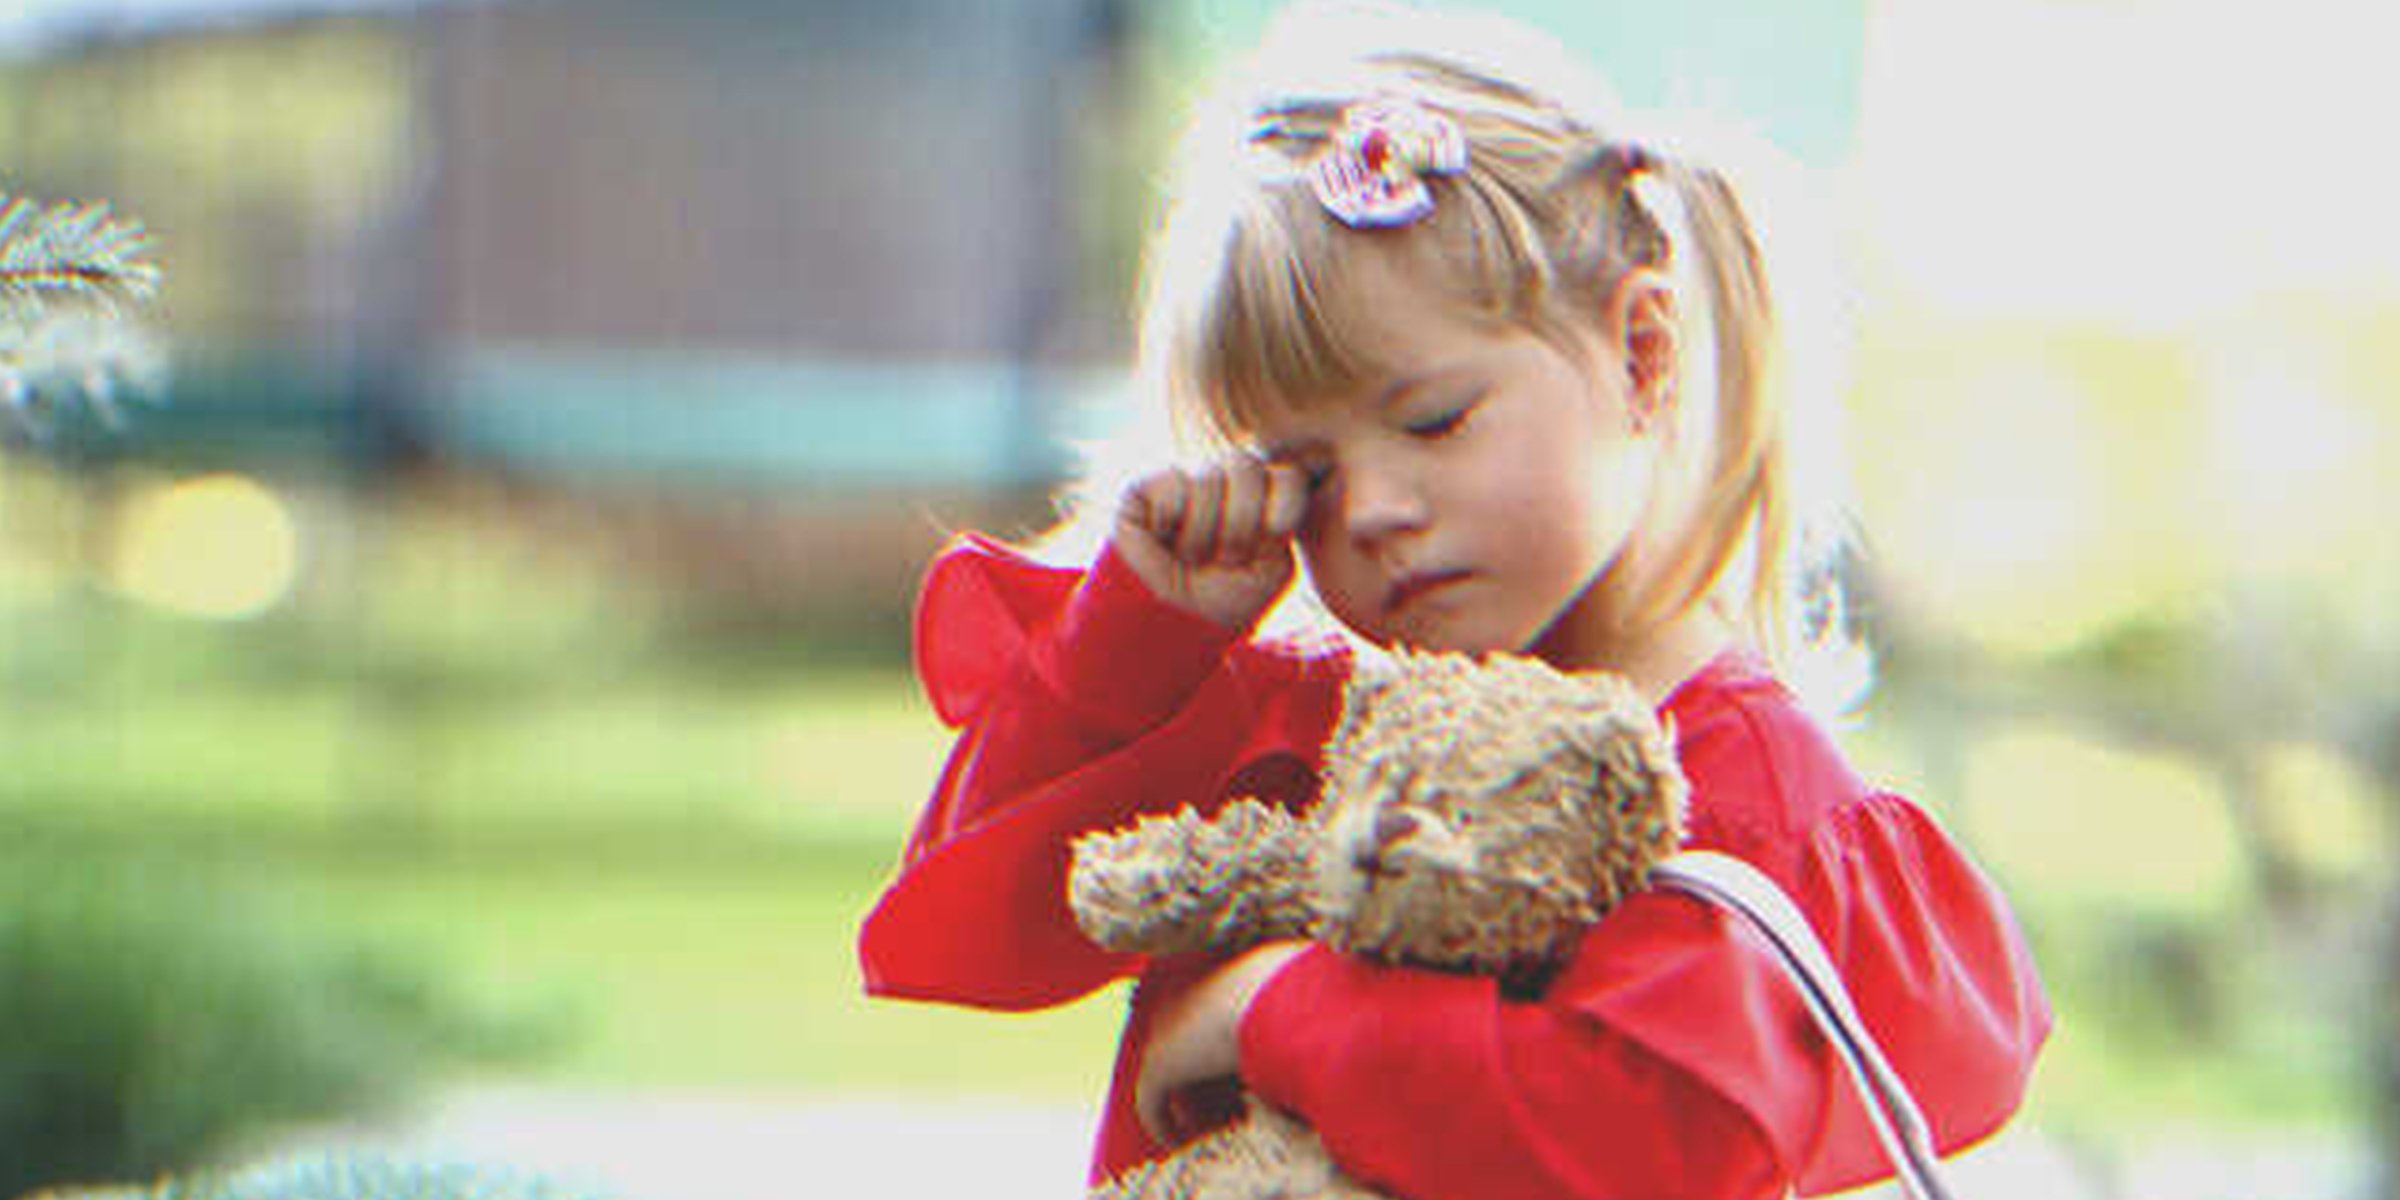 A sleepy girl holding a teddy bear | Source: Shutterstock